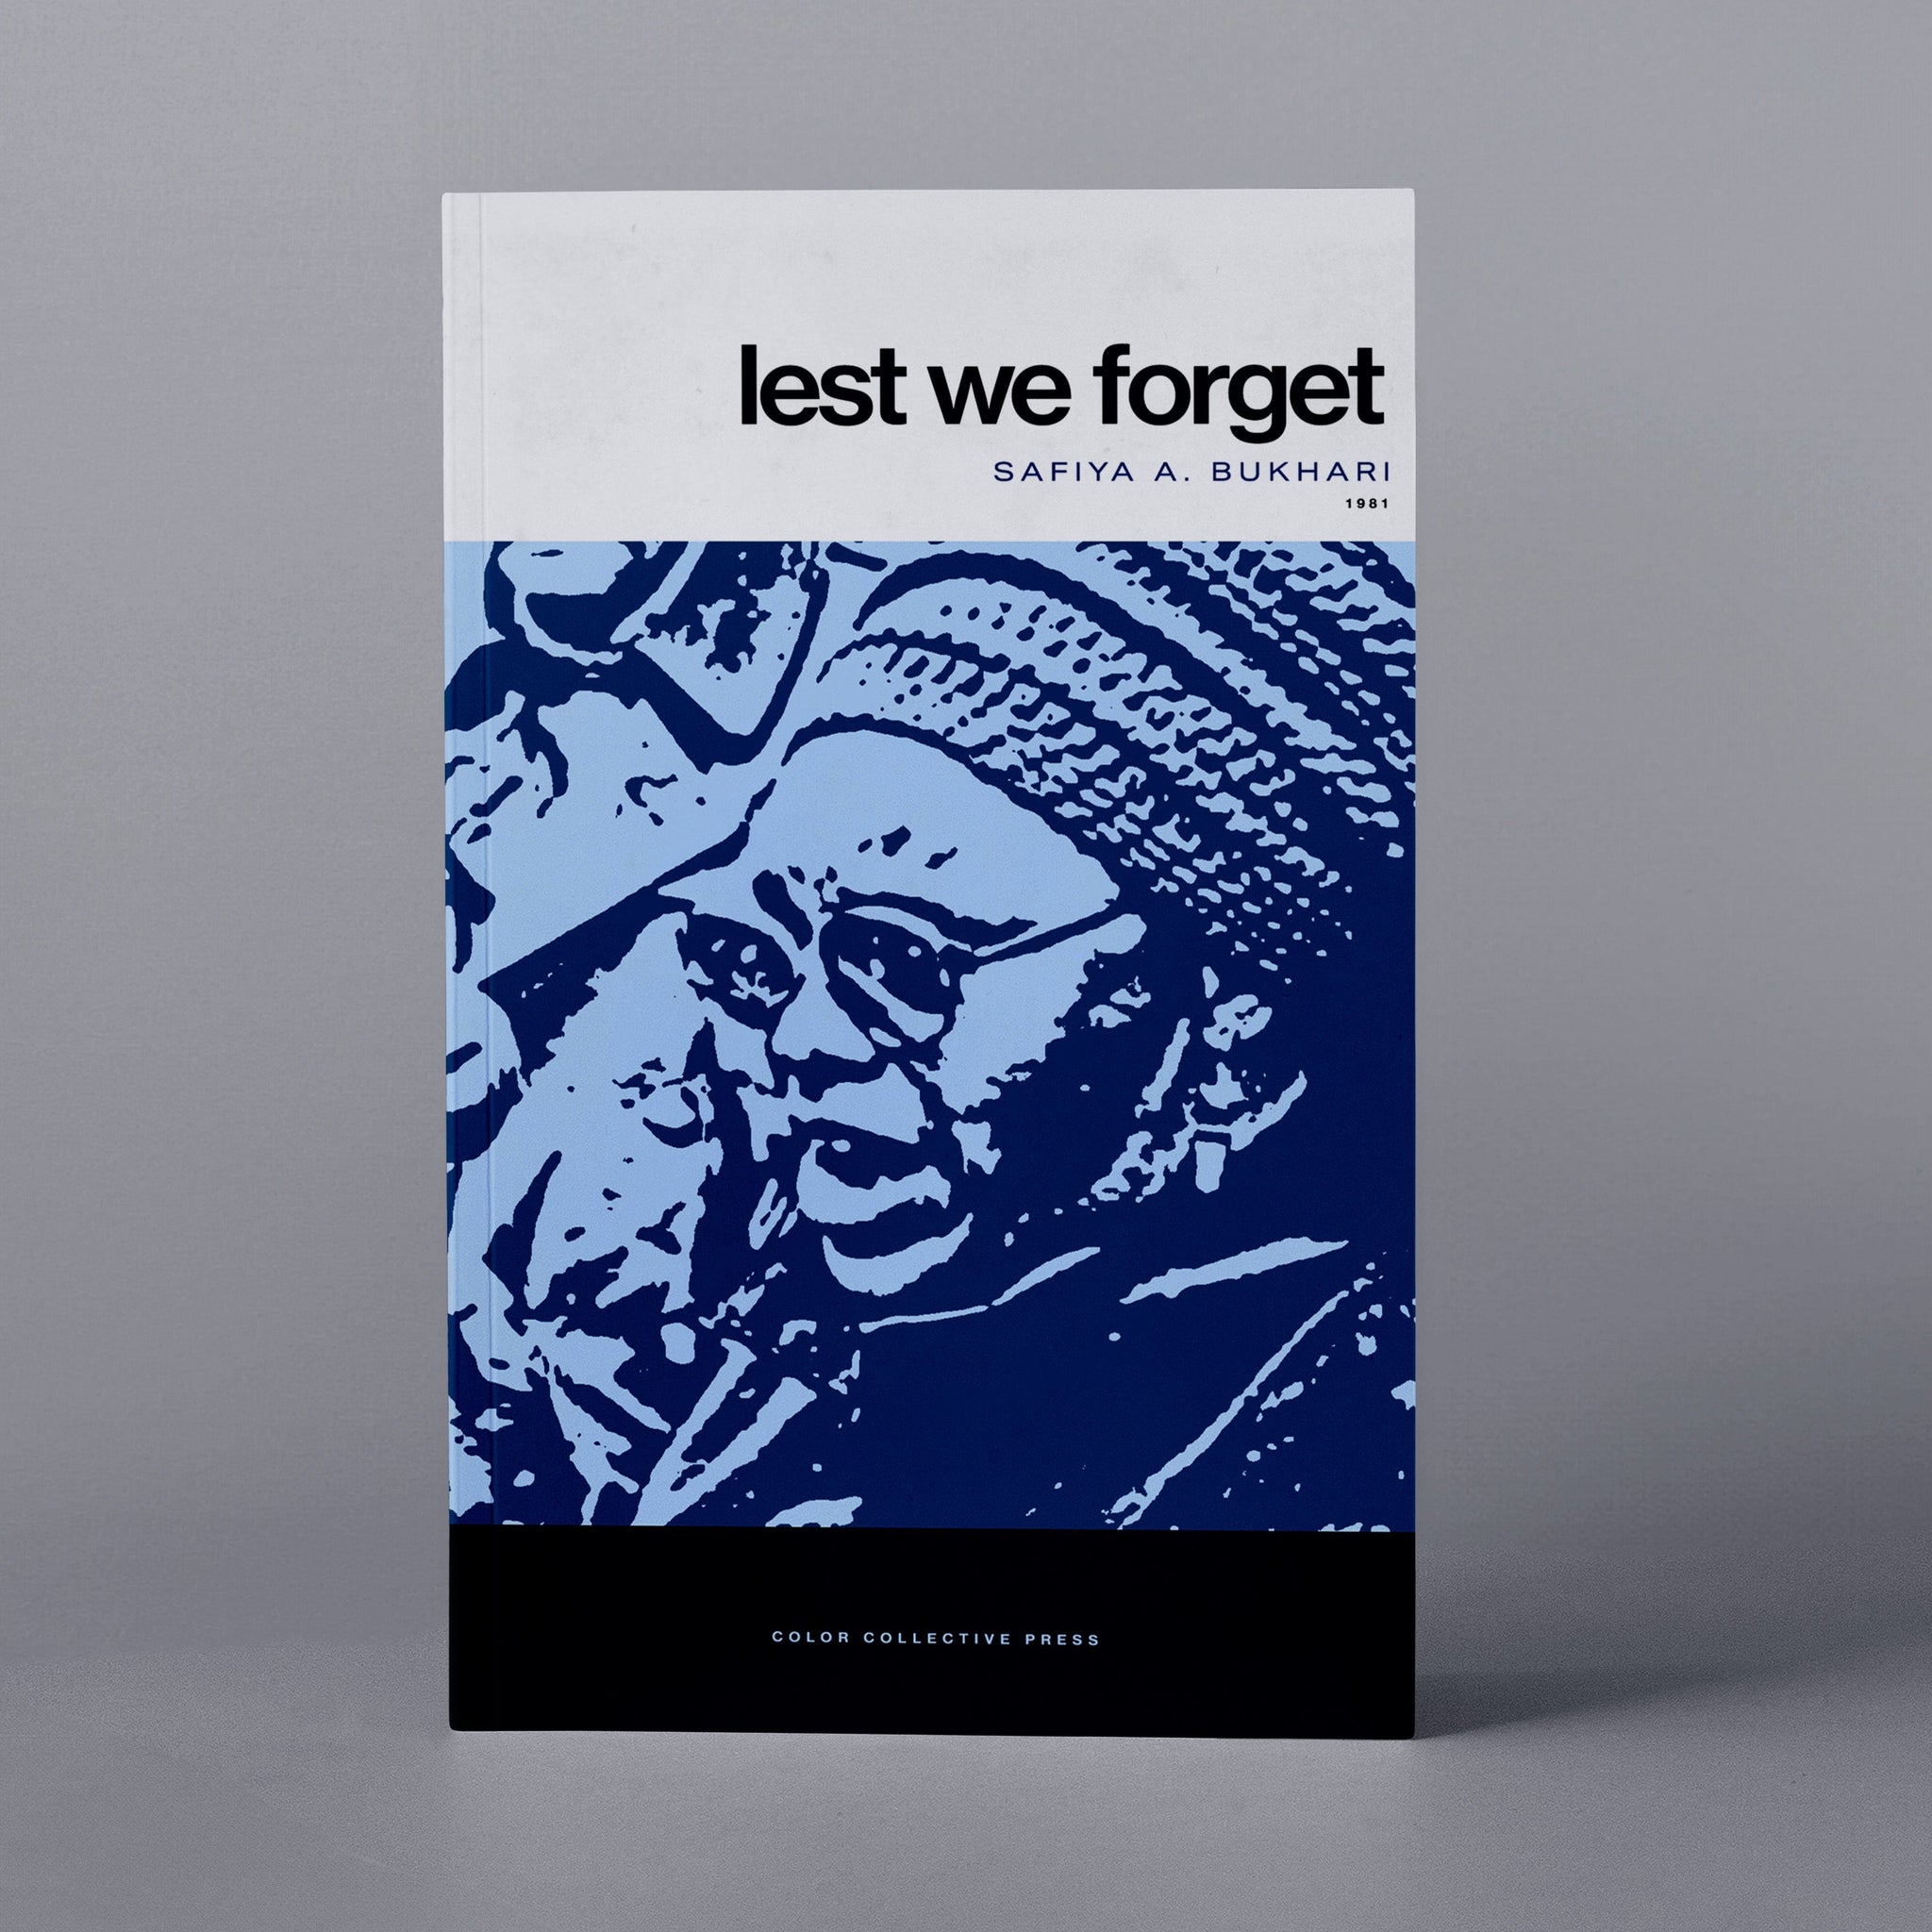 1981: Lest We Forget (Safiya A. Bukhari)